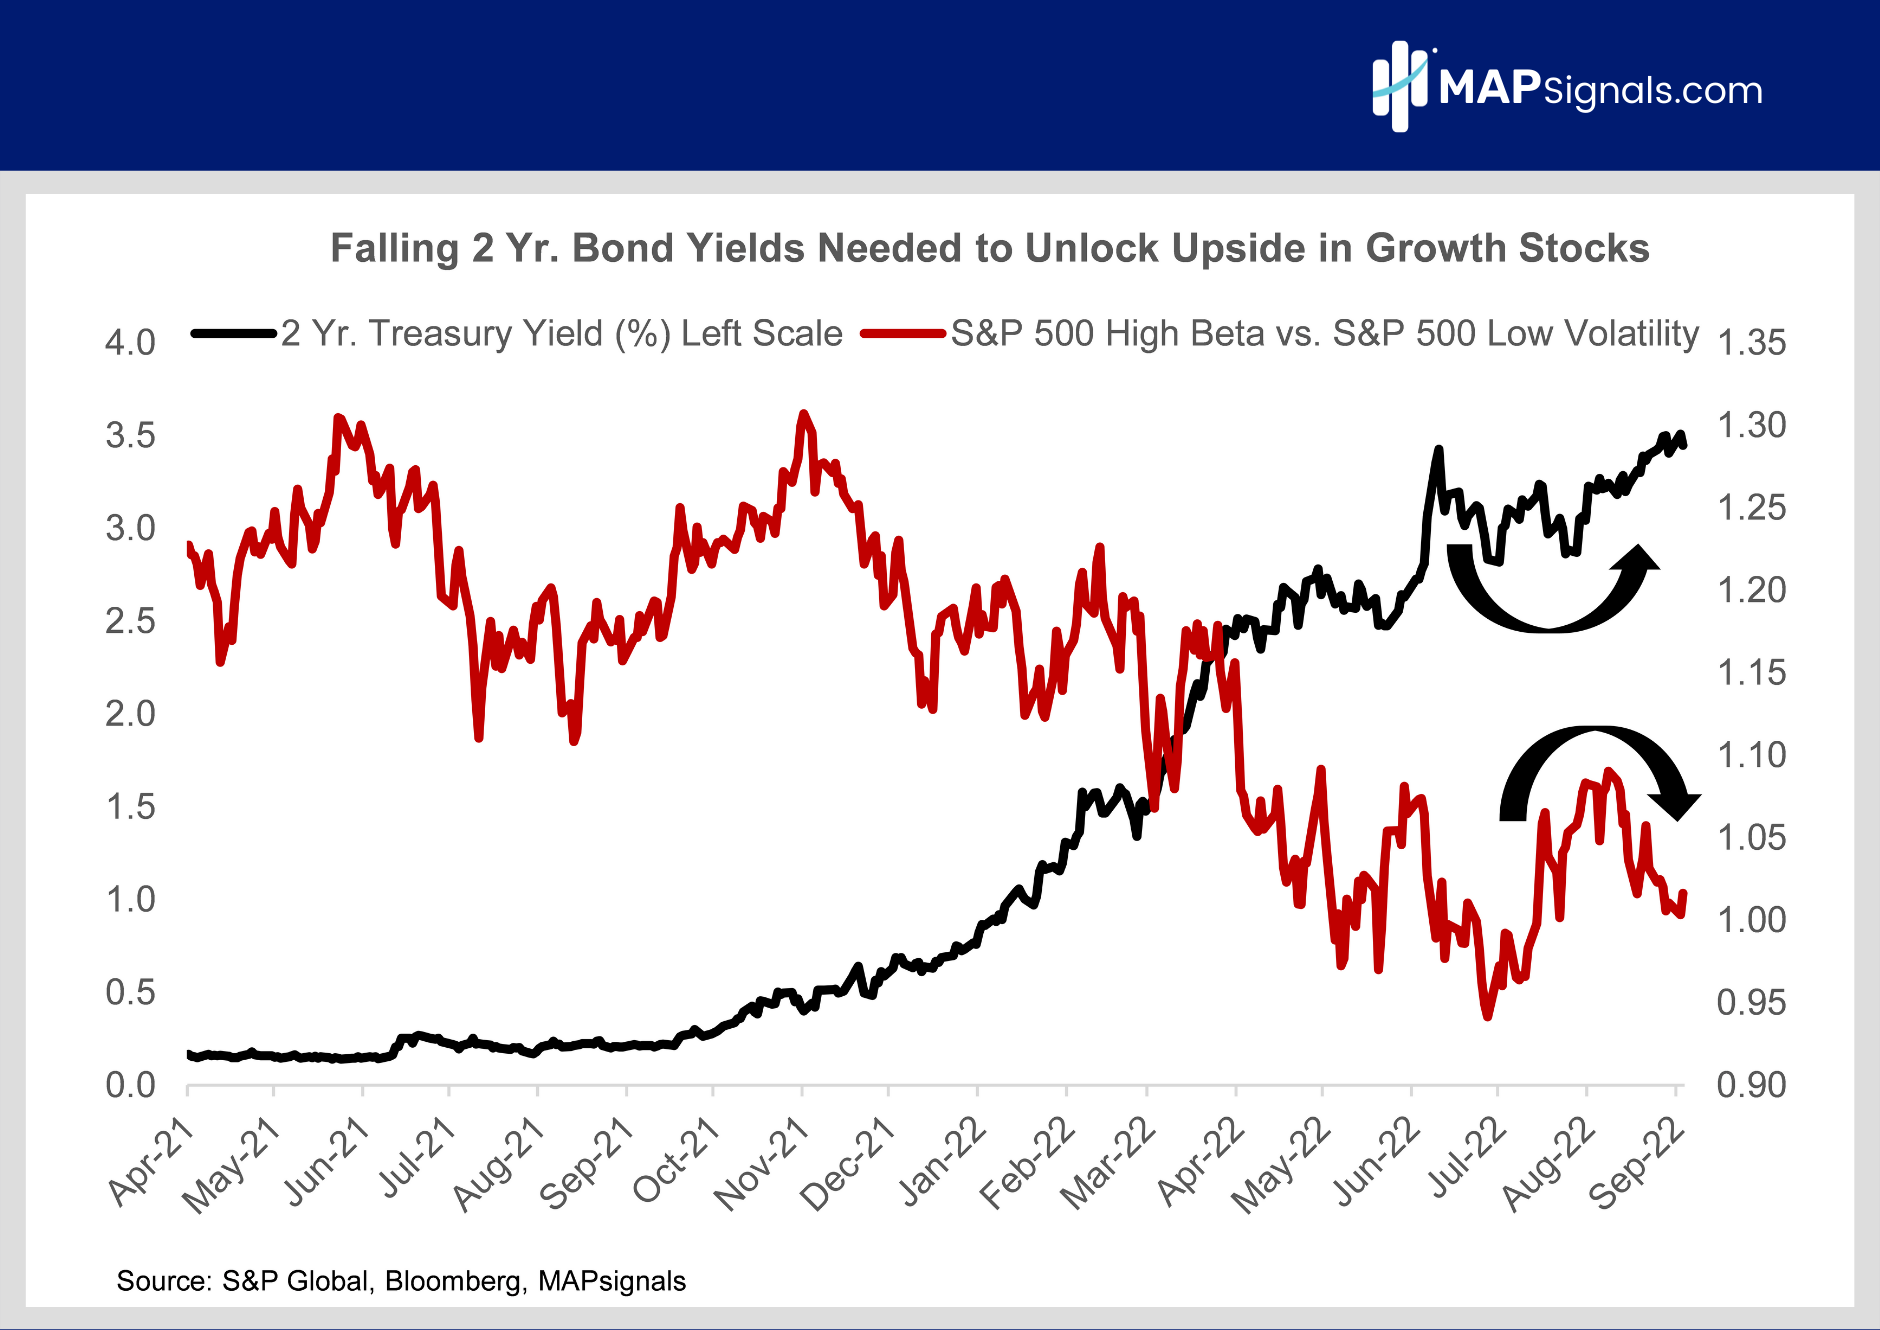 Falling 2 Yr Bond Yields Needed to Unlock Upside in Growth Stocks